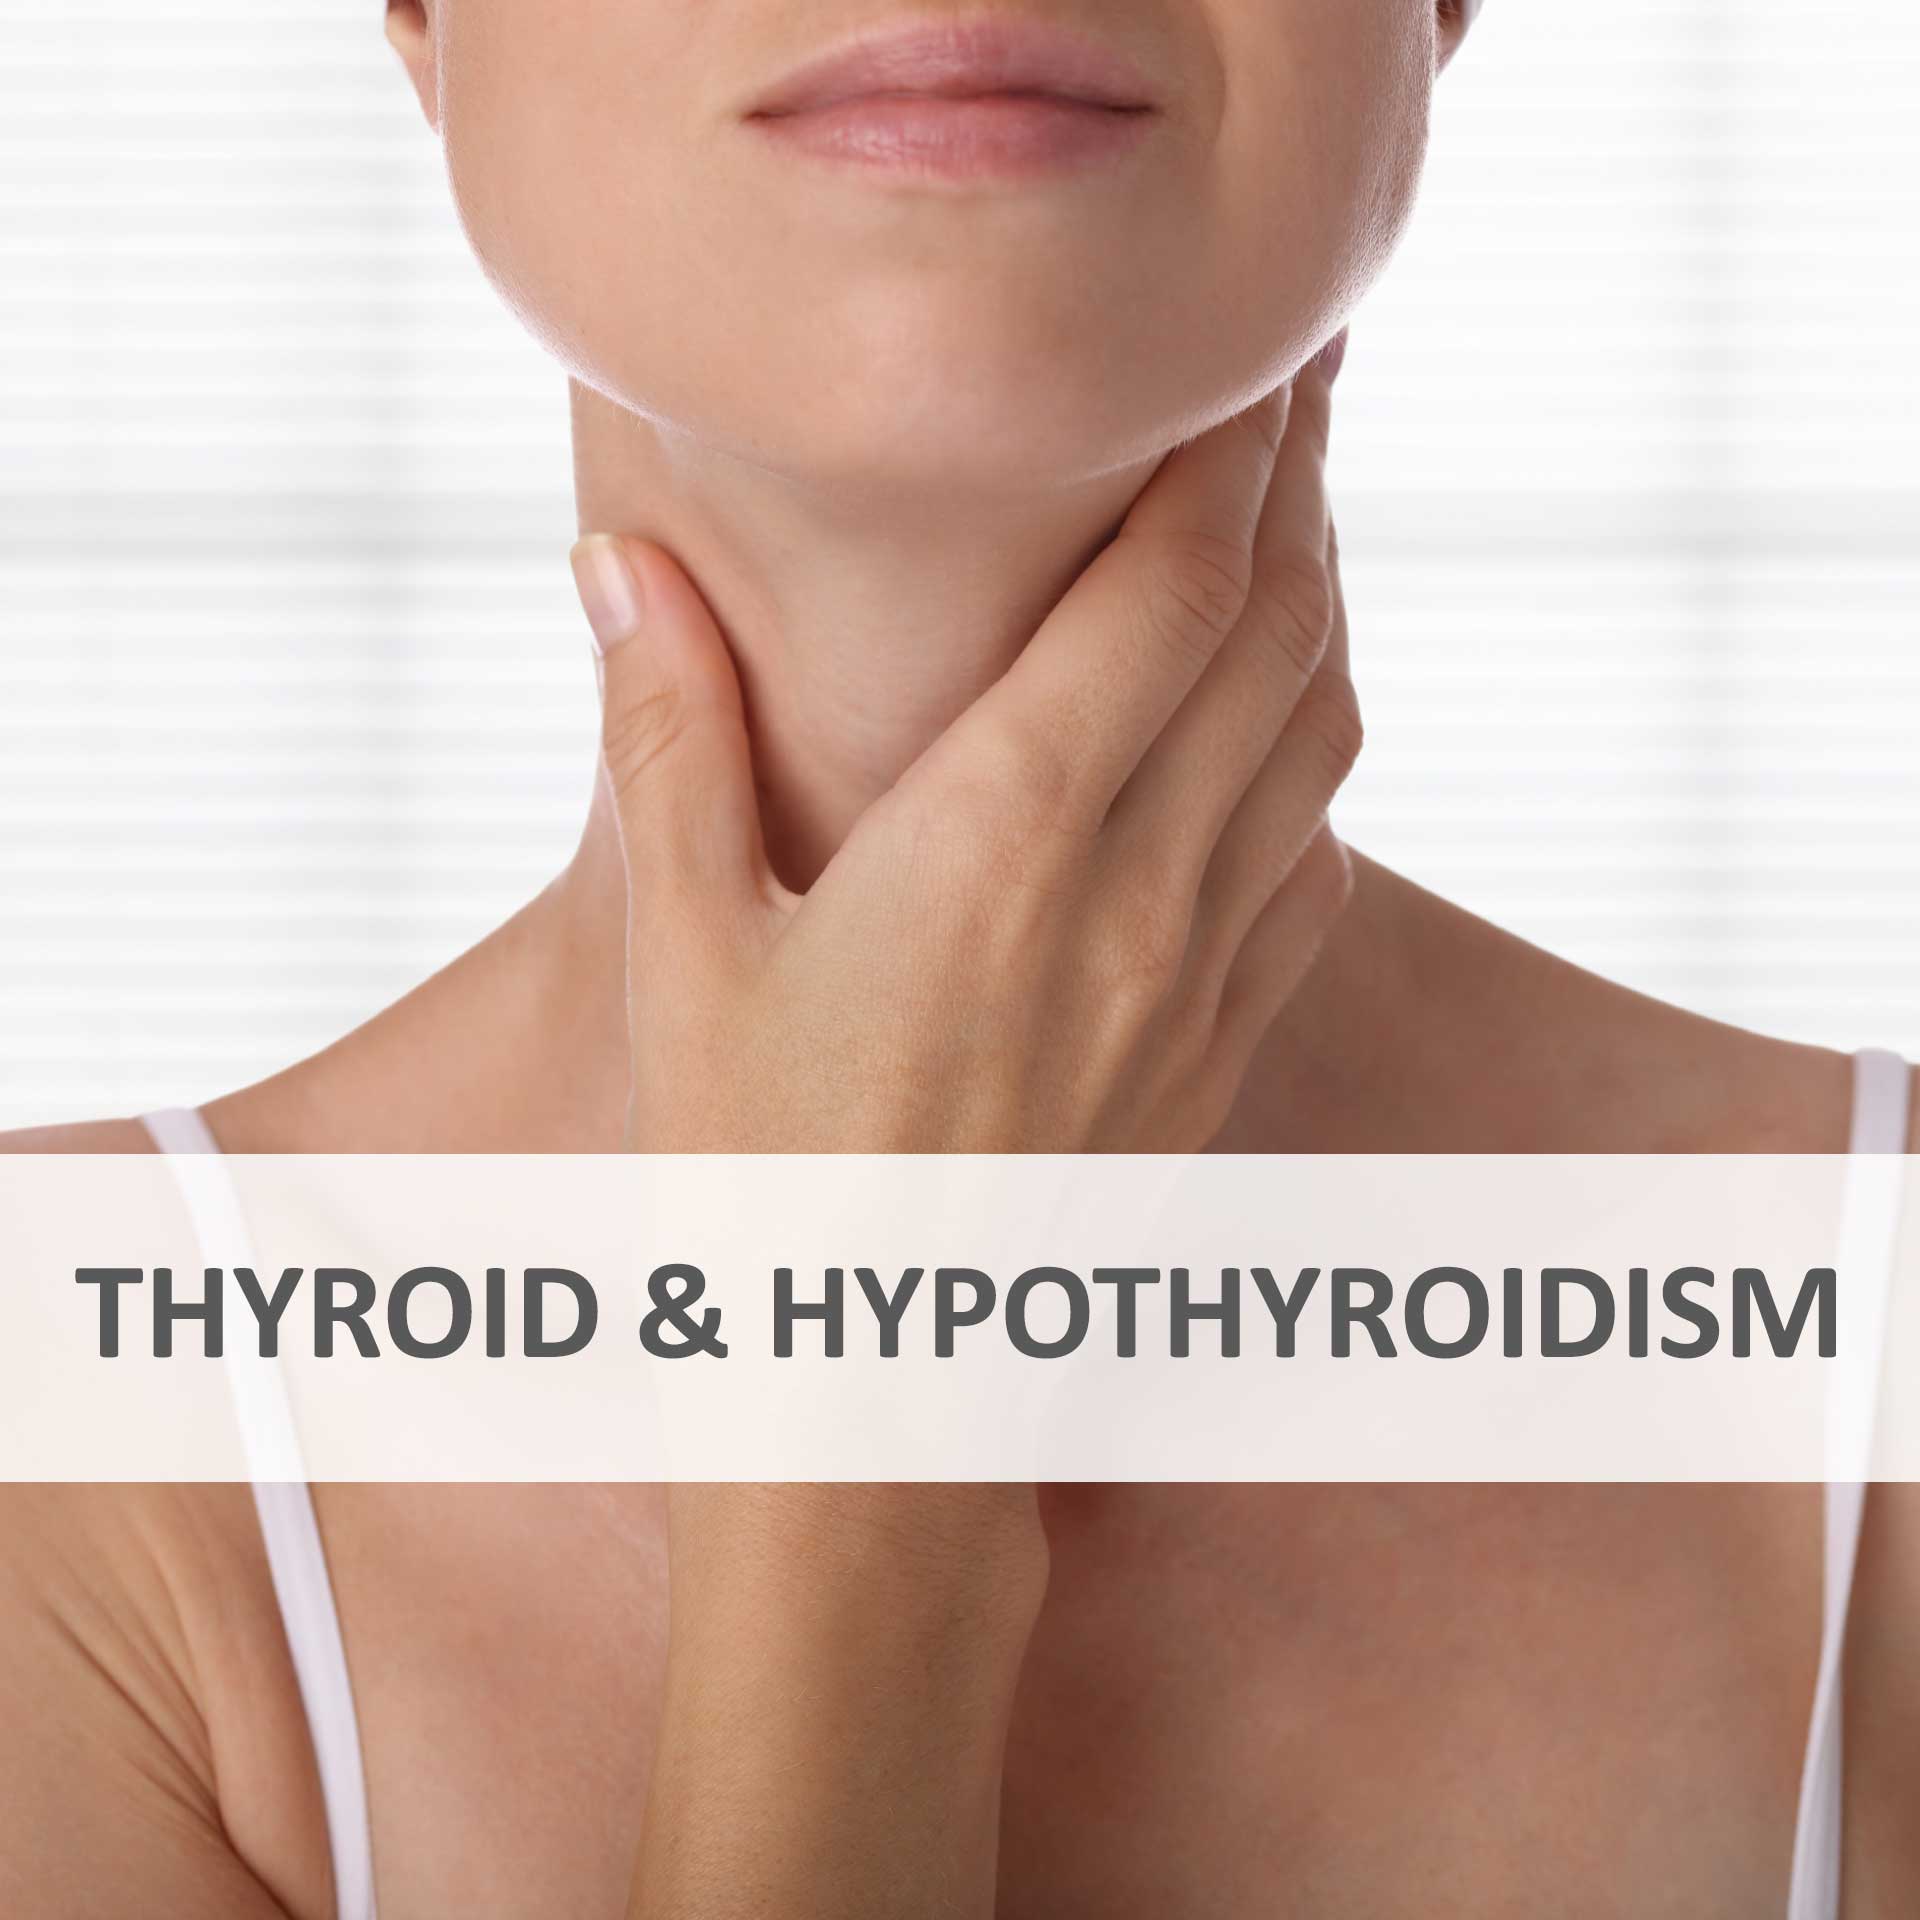 Thyroid & Hypothyroidism